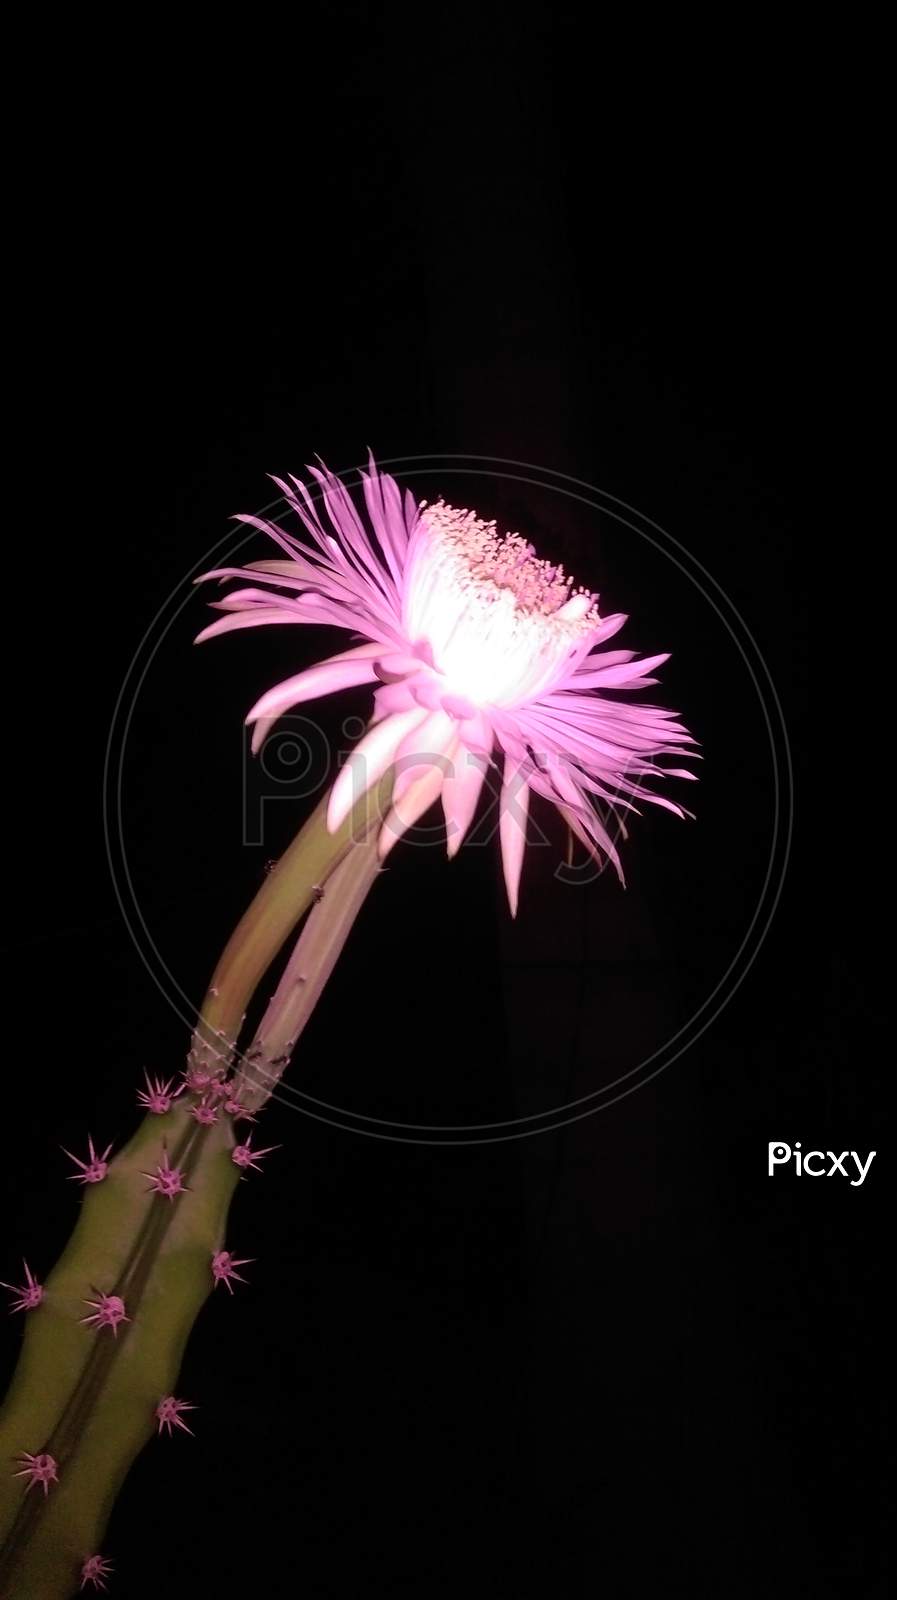 Saussurea obvallata (Brahma Kamal) Pink and White flower